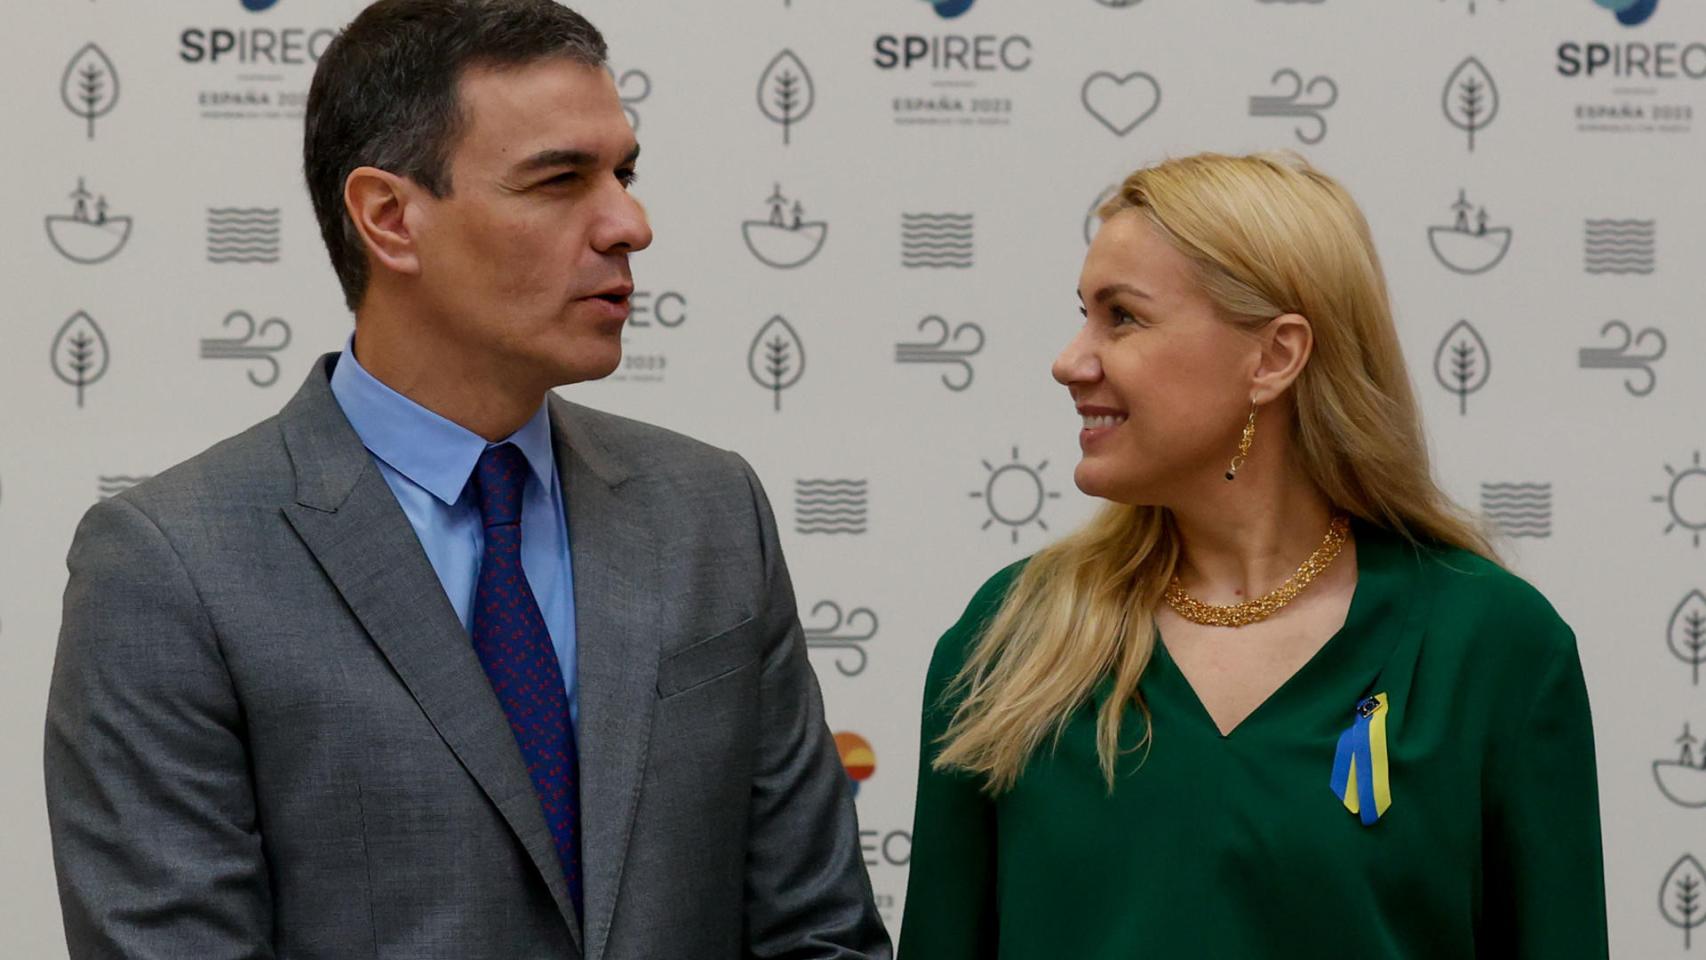 Pedro Sánchez, presidente de España, con Kadri Simson, comisaria de Energía y Clima de la Comisión Europea.